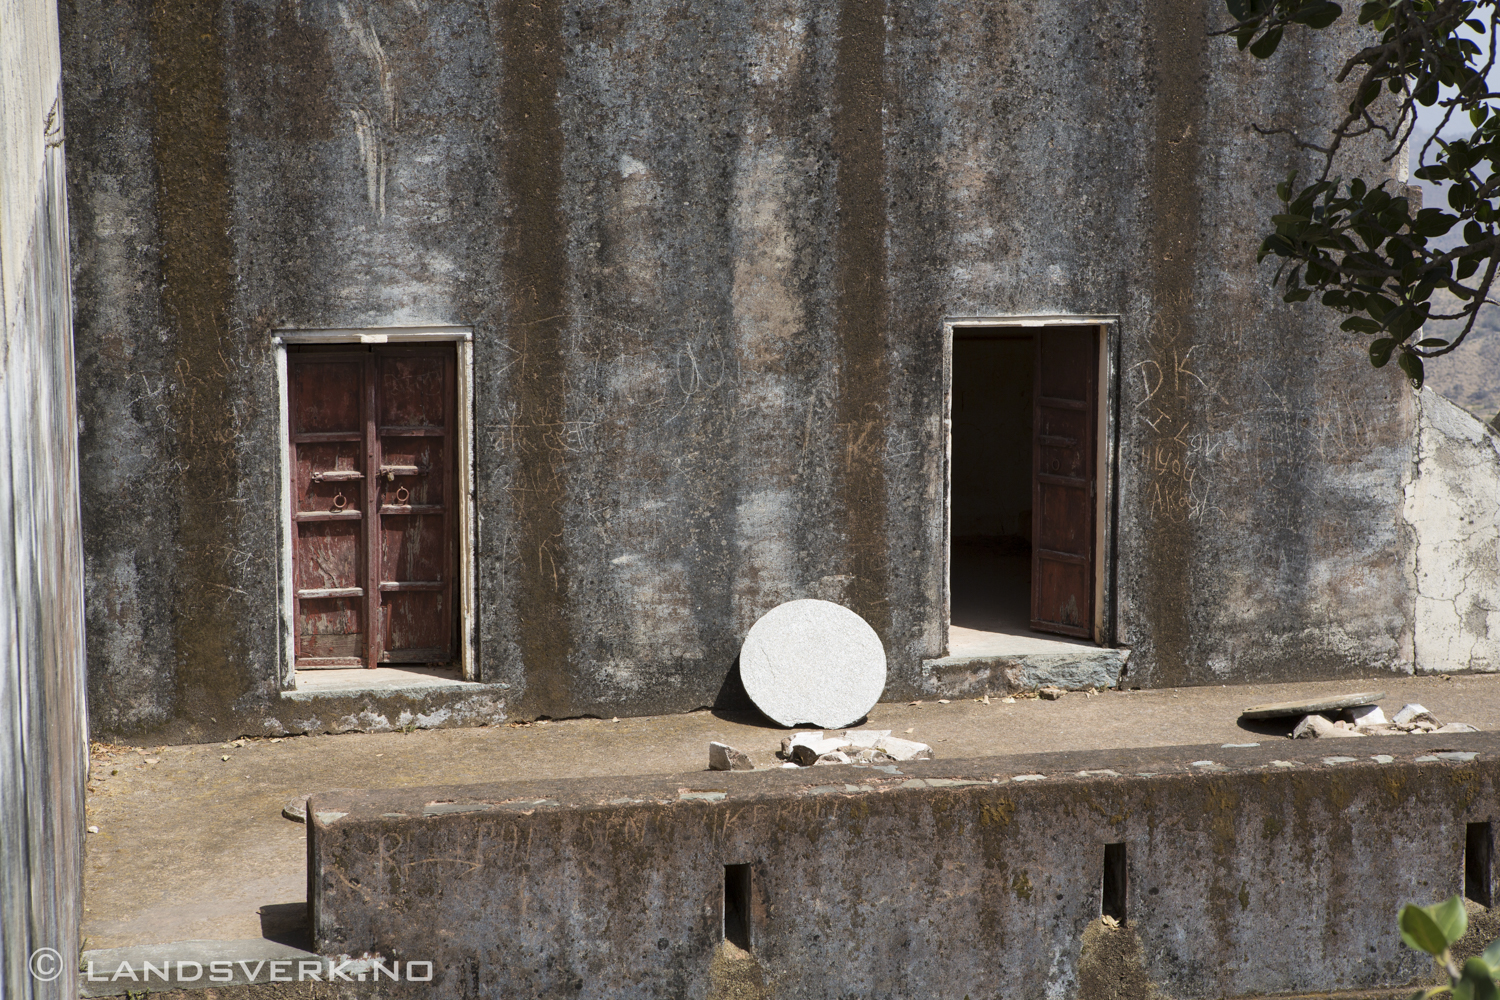 Kumbhalgarh Fort, India. 

(Canon EOS 5D Mark III / Canon EF 24-70mm f/2.8 L USM)